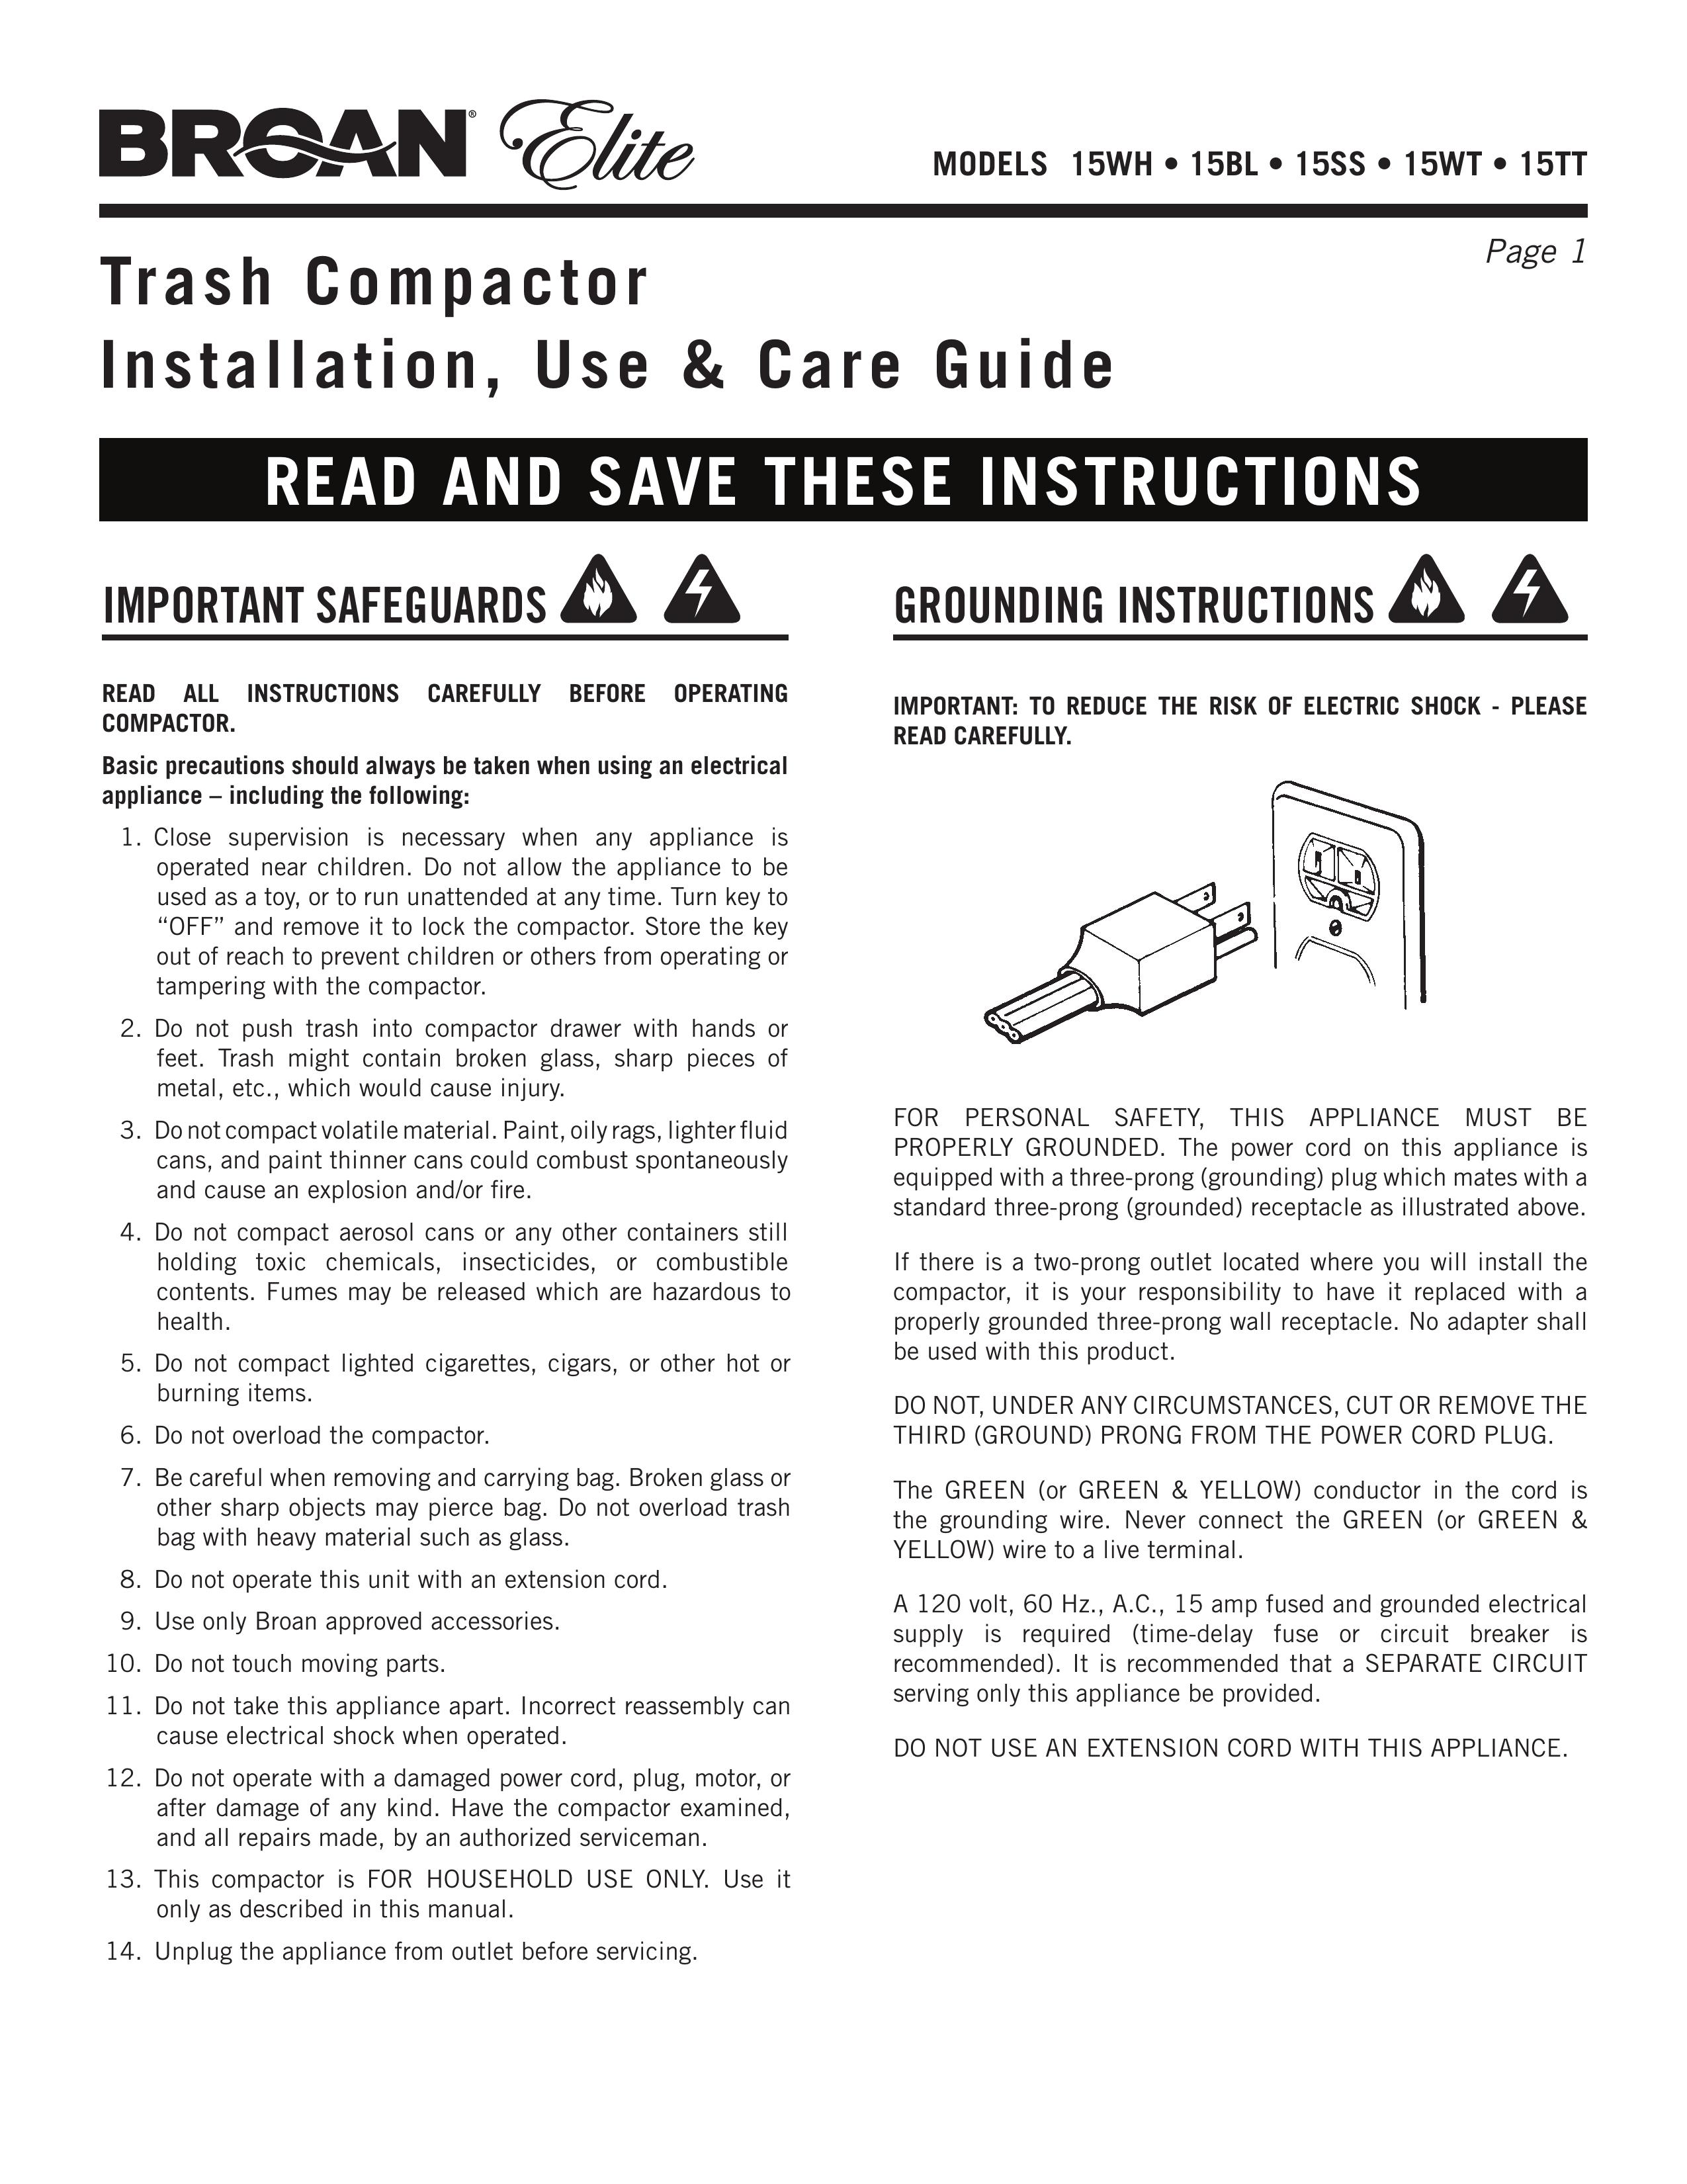 Broan 15Bl Trash Compactor User Manual